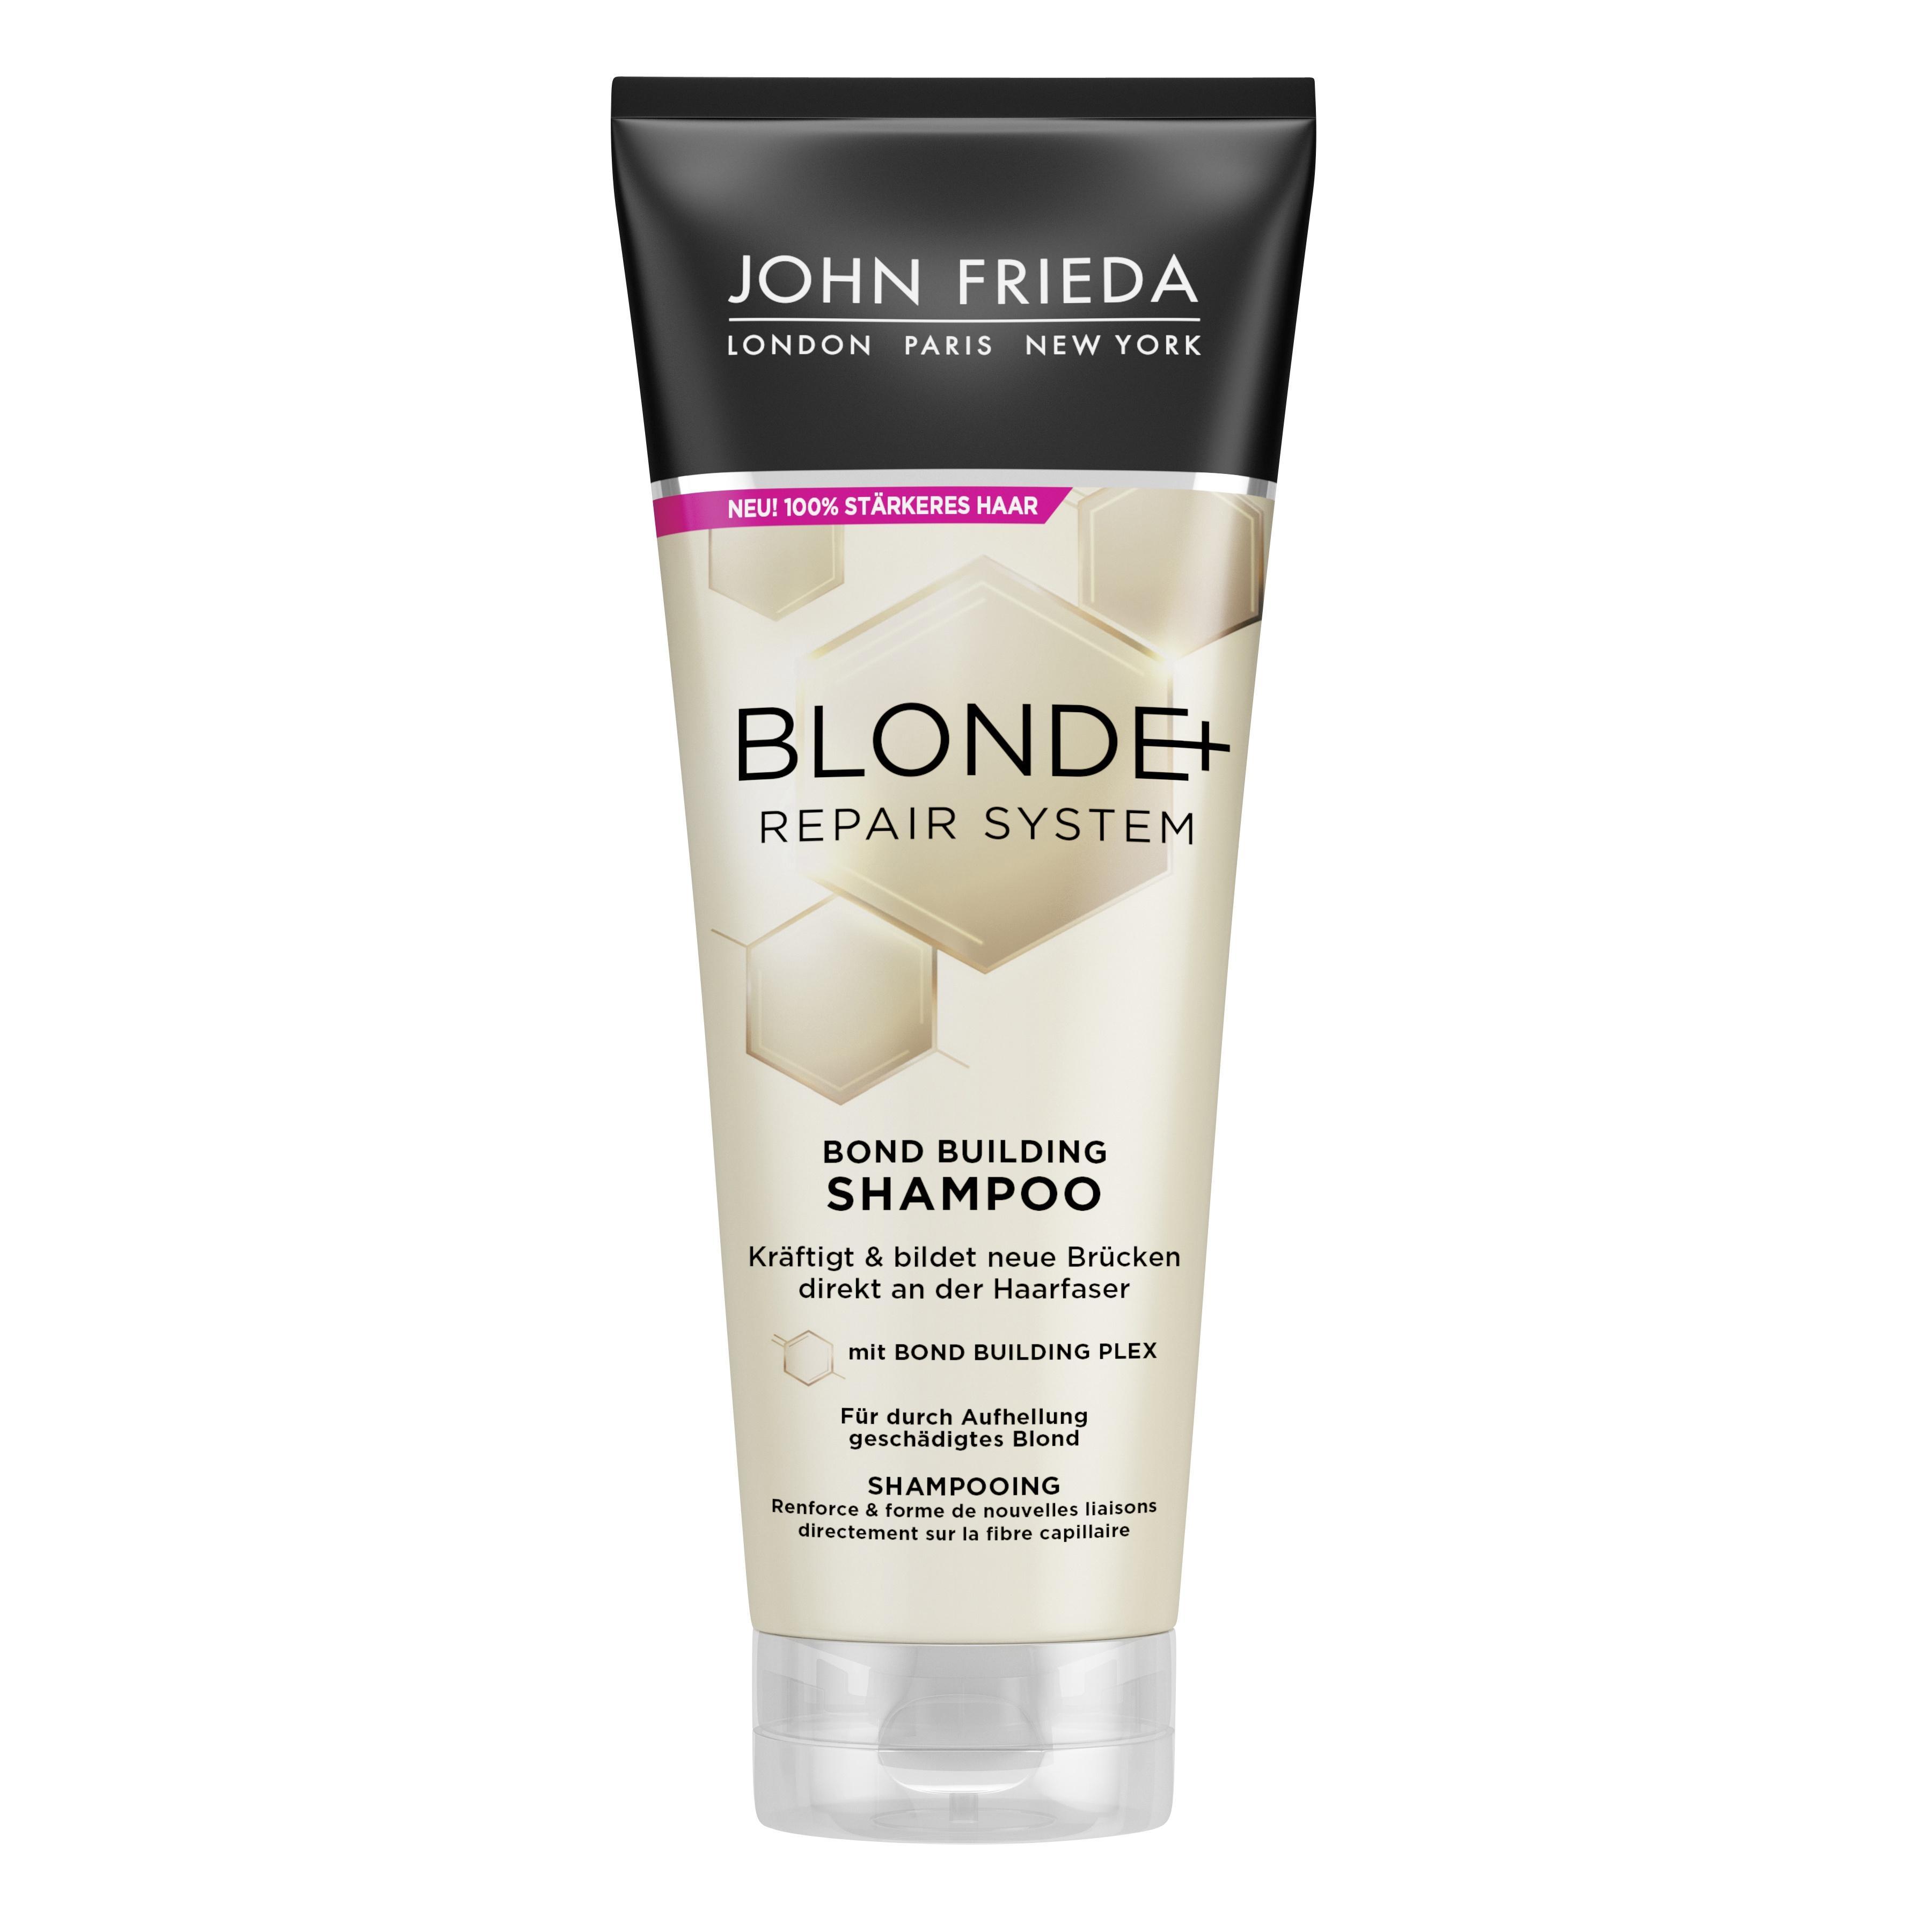 Blonde+ Repair System - Blonde+ Bond Builiding Shampoo